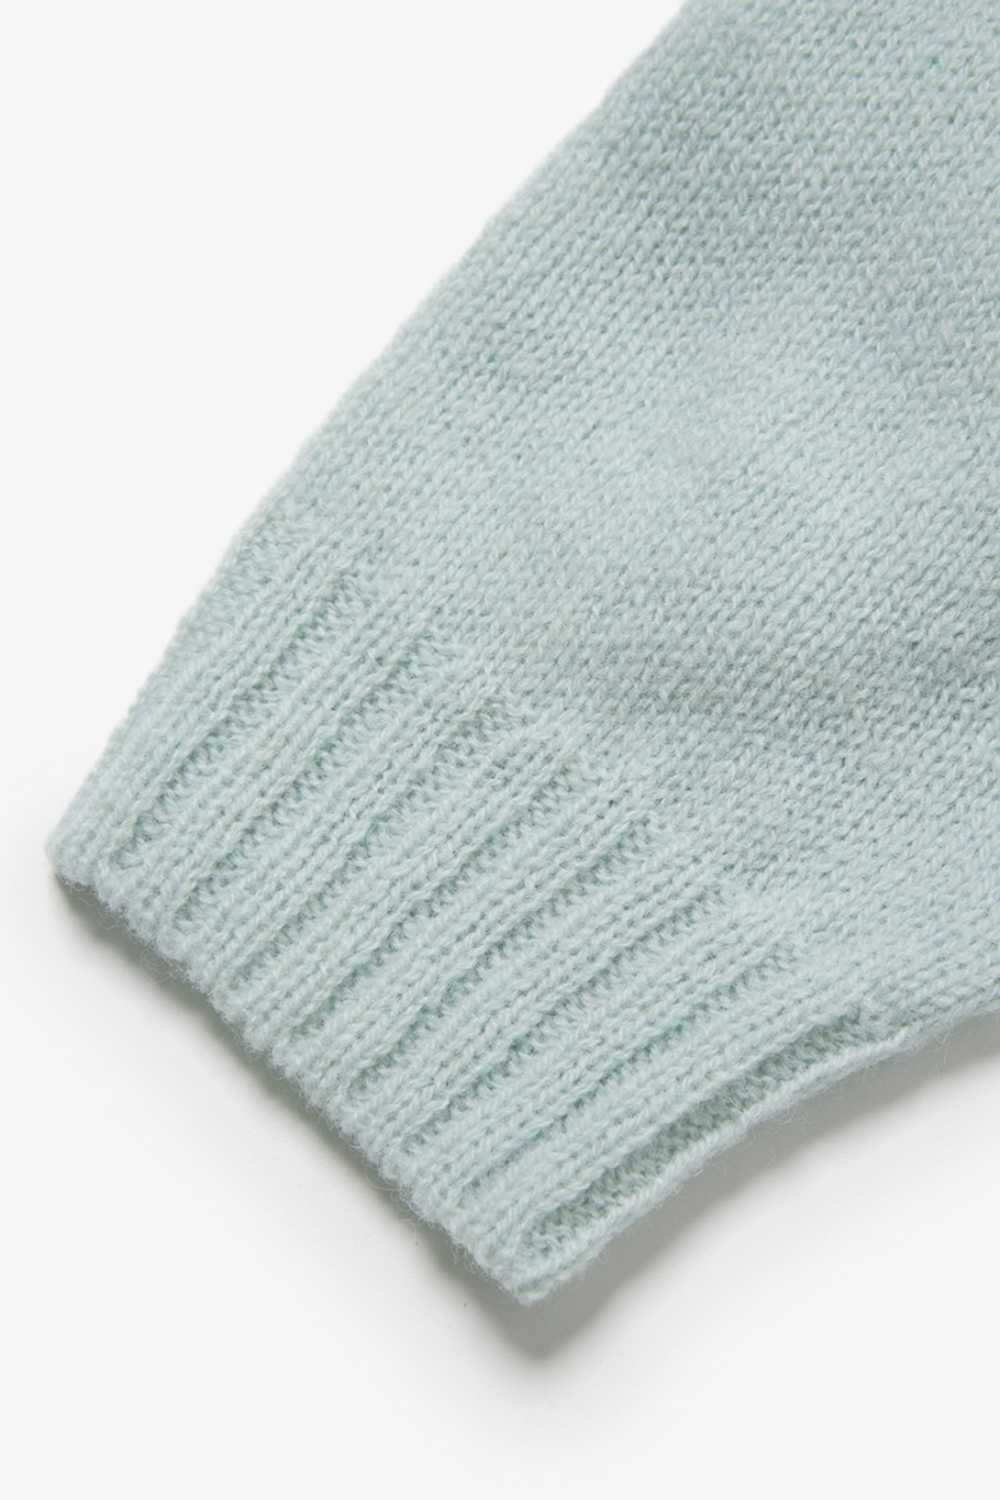 Auralee - pure shetland wool knit sweater mint 5 - image 3